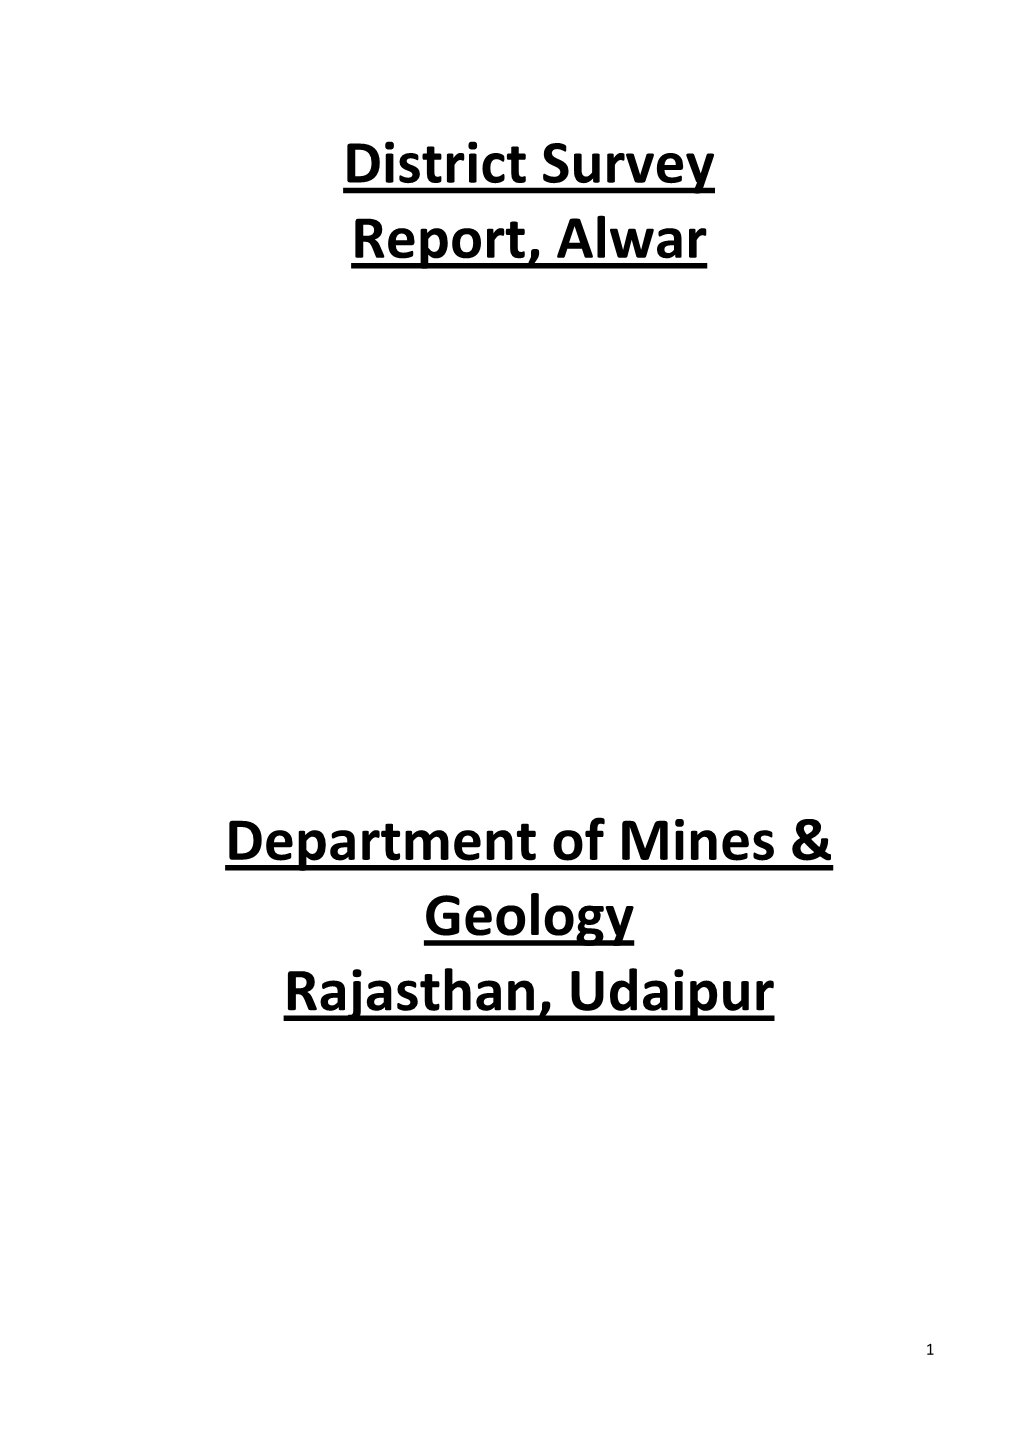 District Survey Report, Alwar Department of Mines & Geology Rajasthan, Udaipur